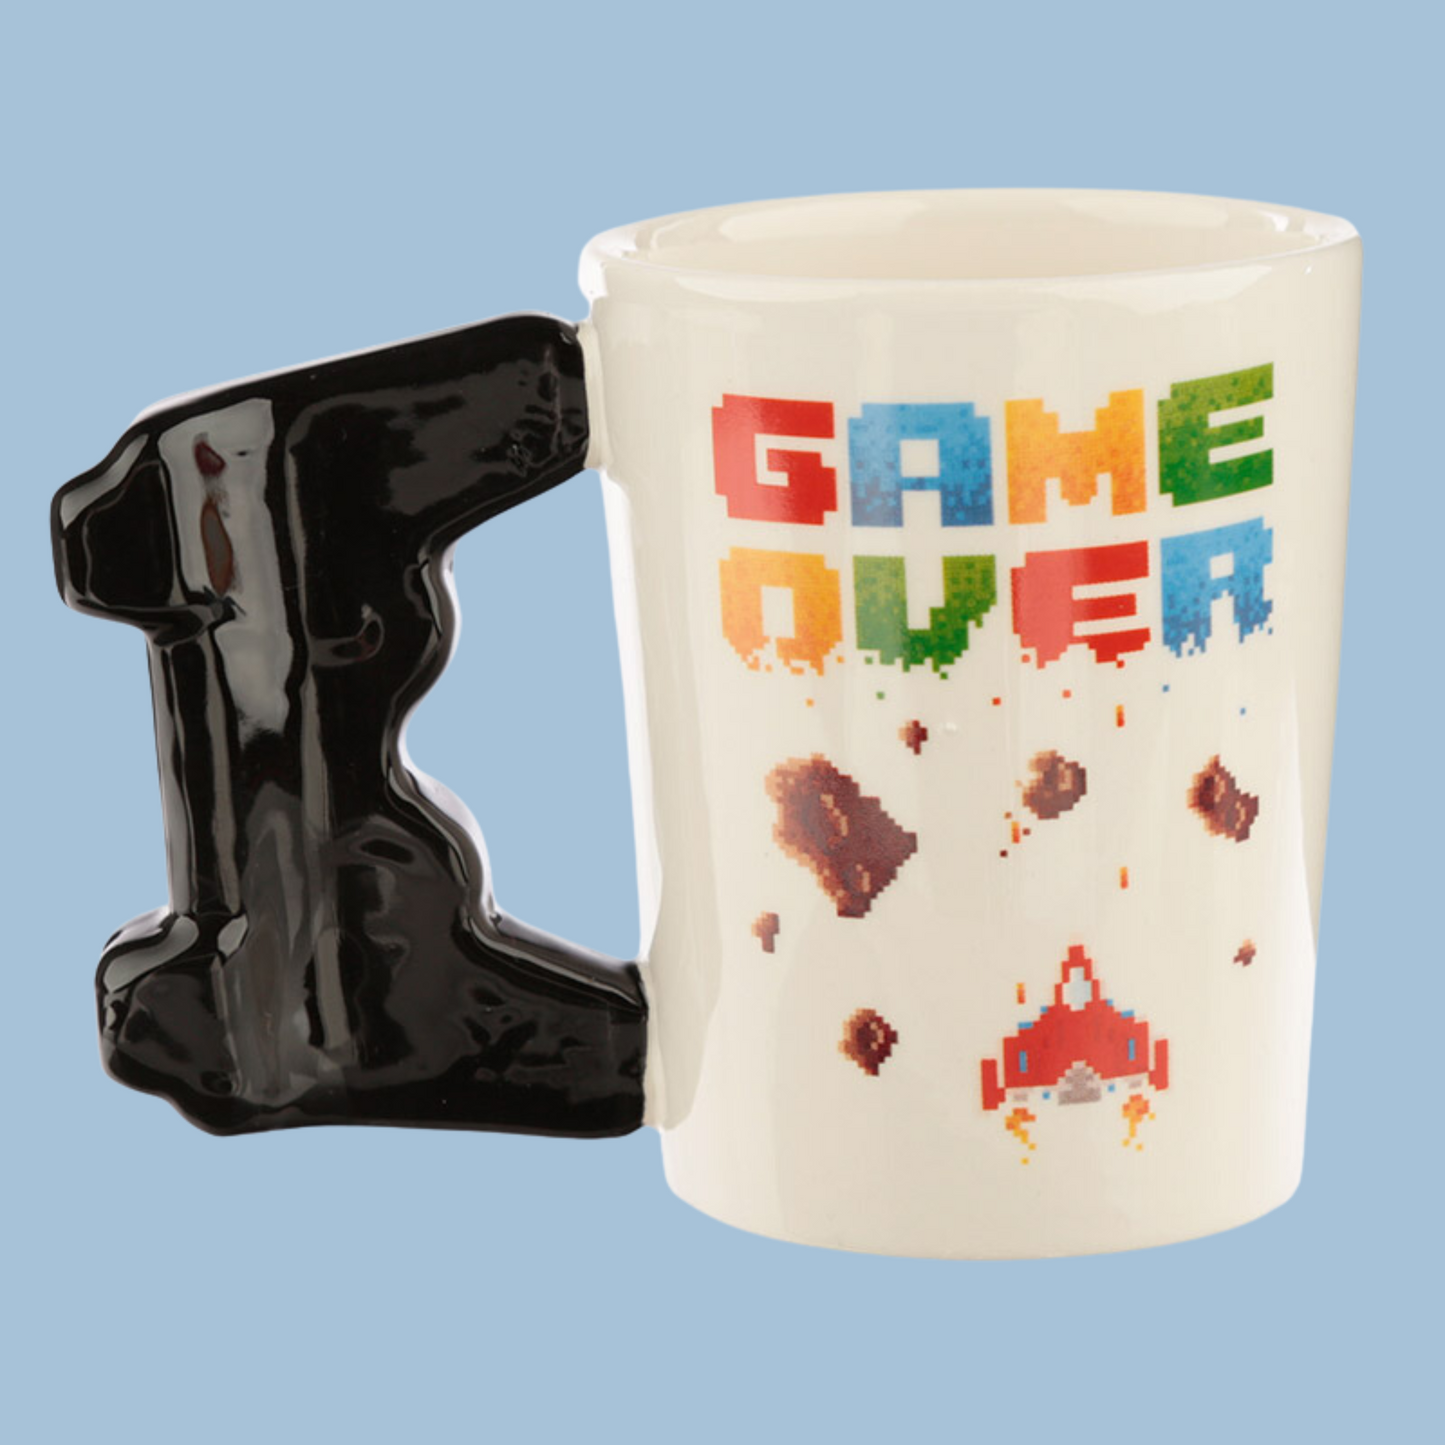 Ceramic Gamer Mug with Joypad Handle